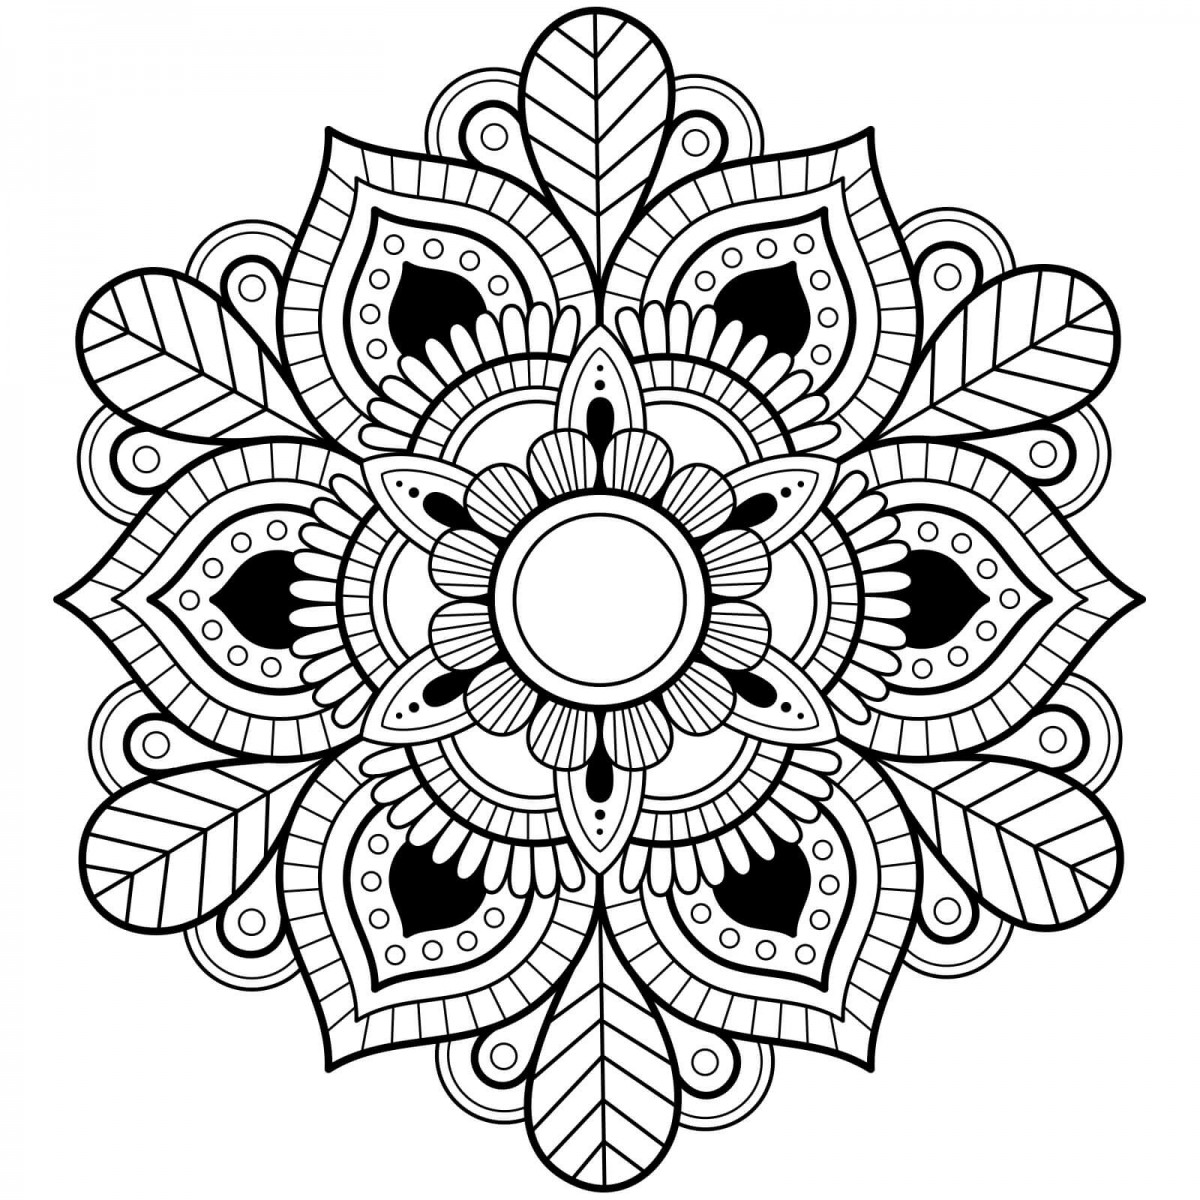 44. Detailed Mandala Coloring Page